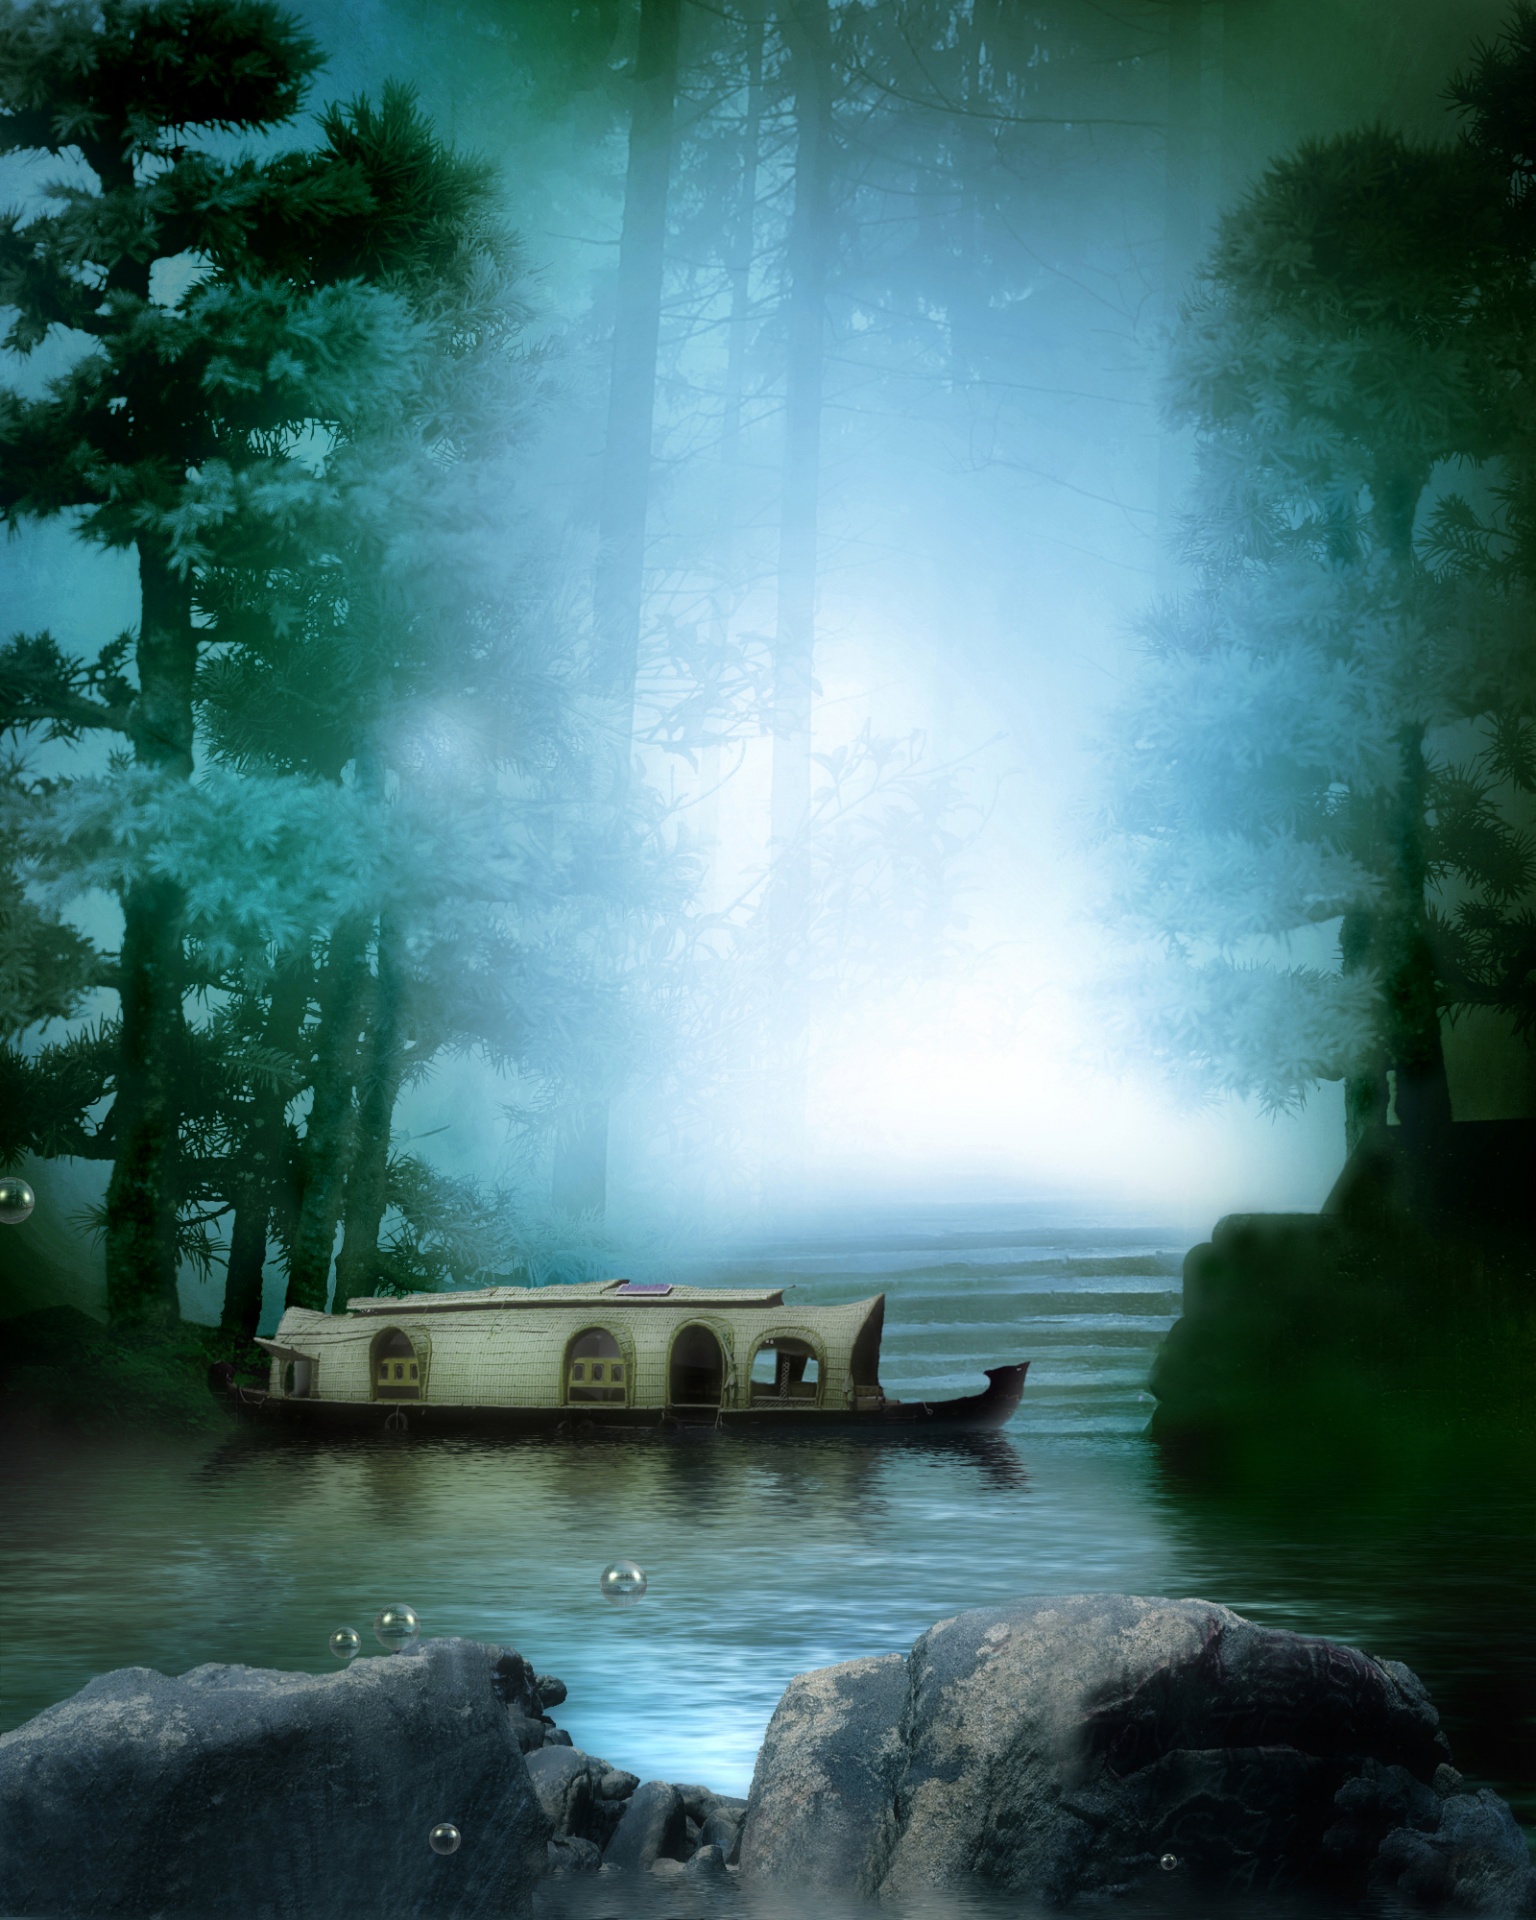 Forest fantasy background